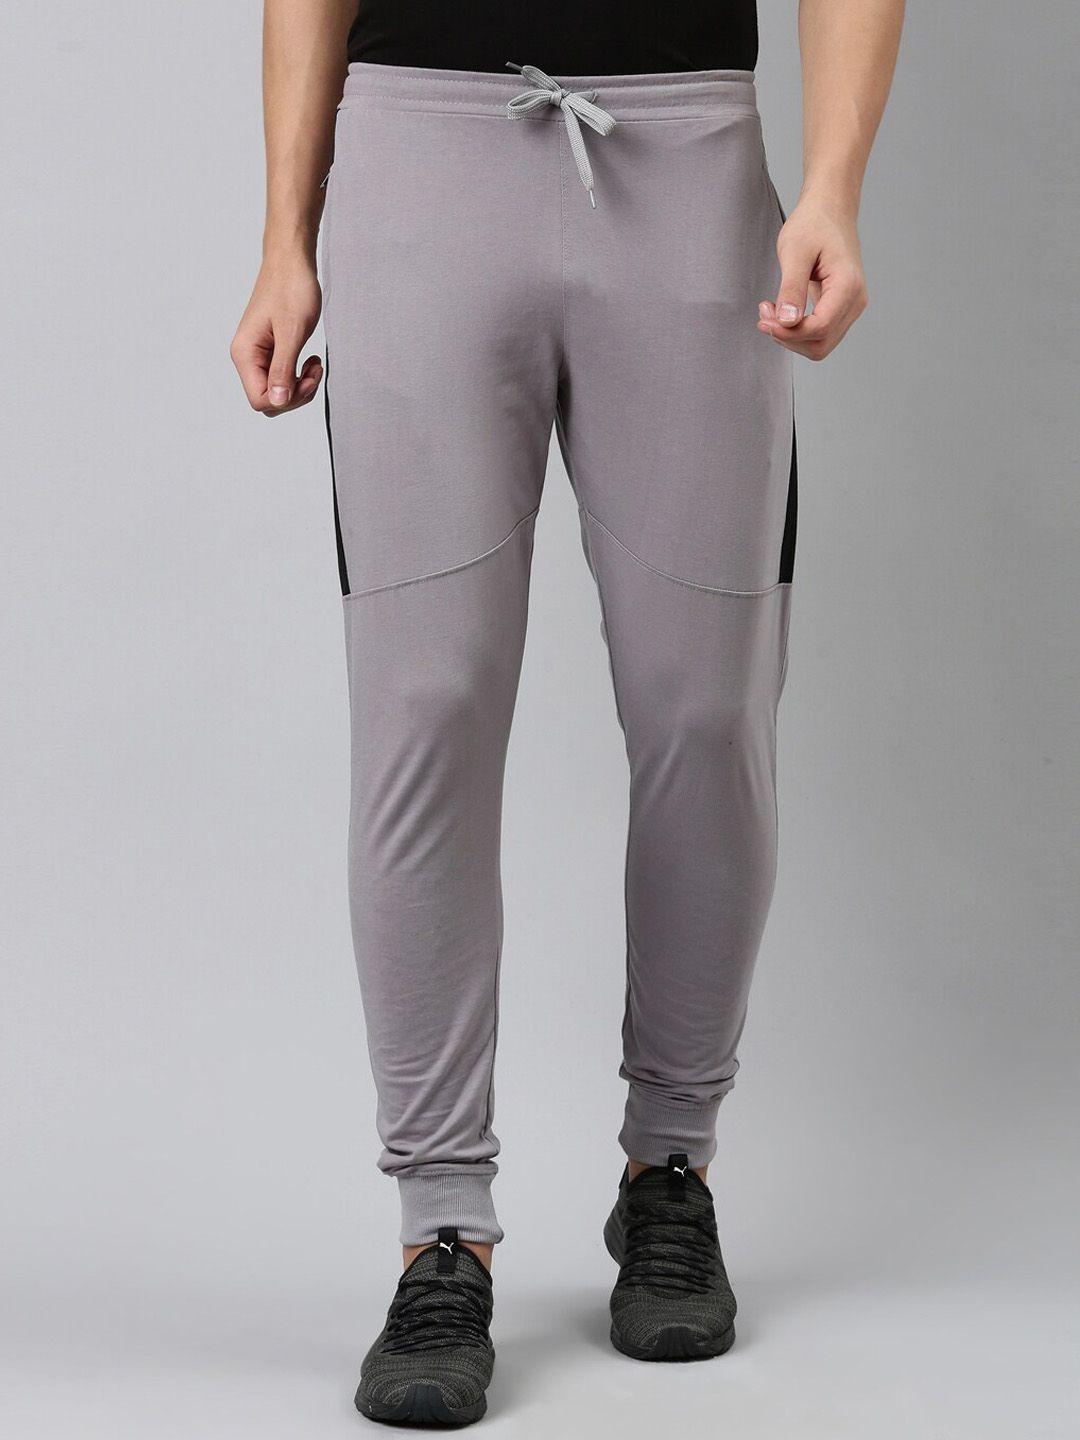 dixcy scott men grey & black printed slim-fit joggers